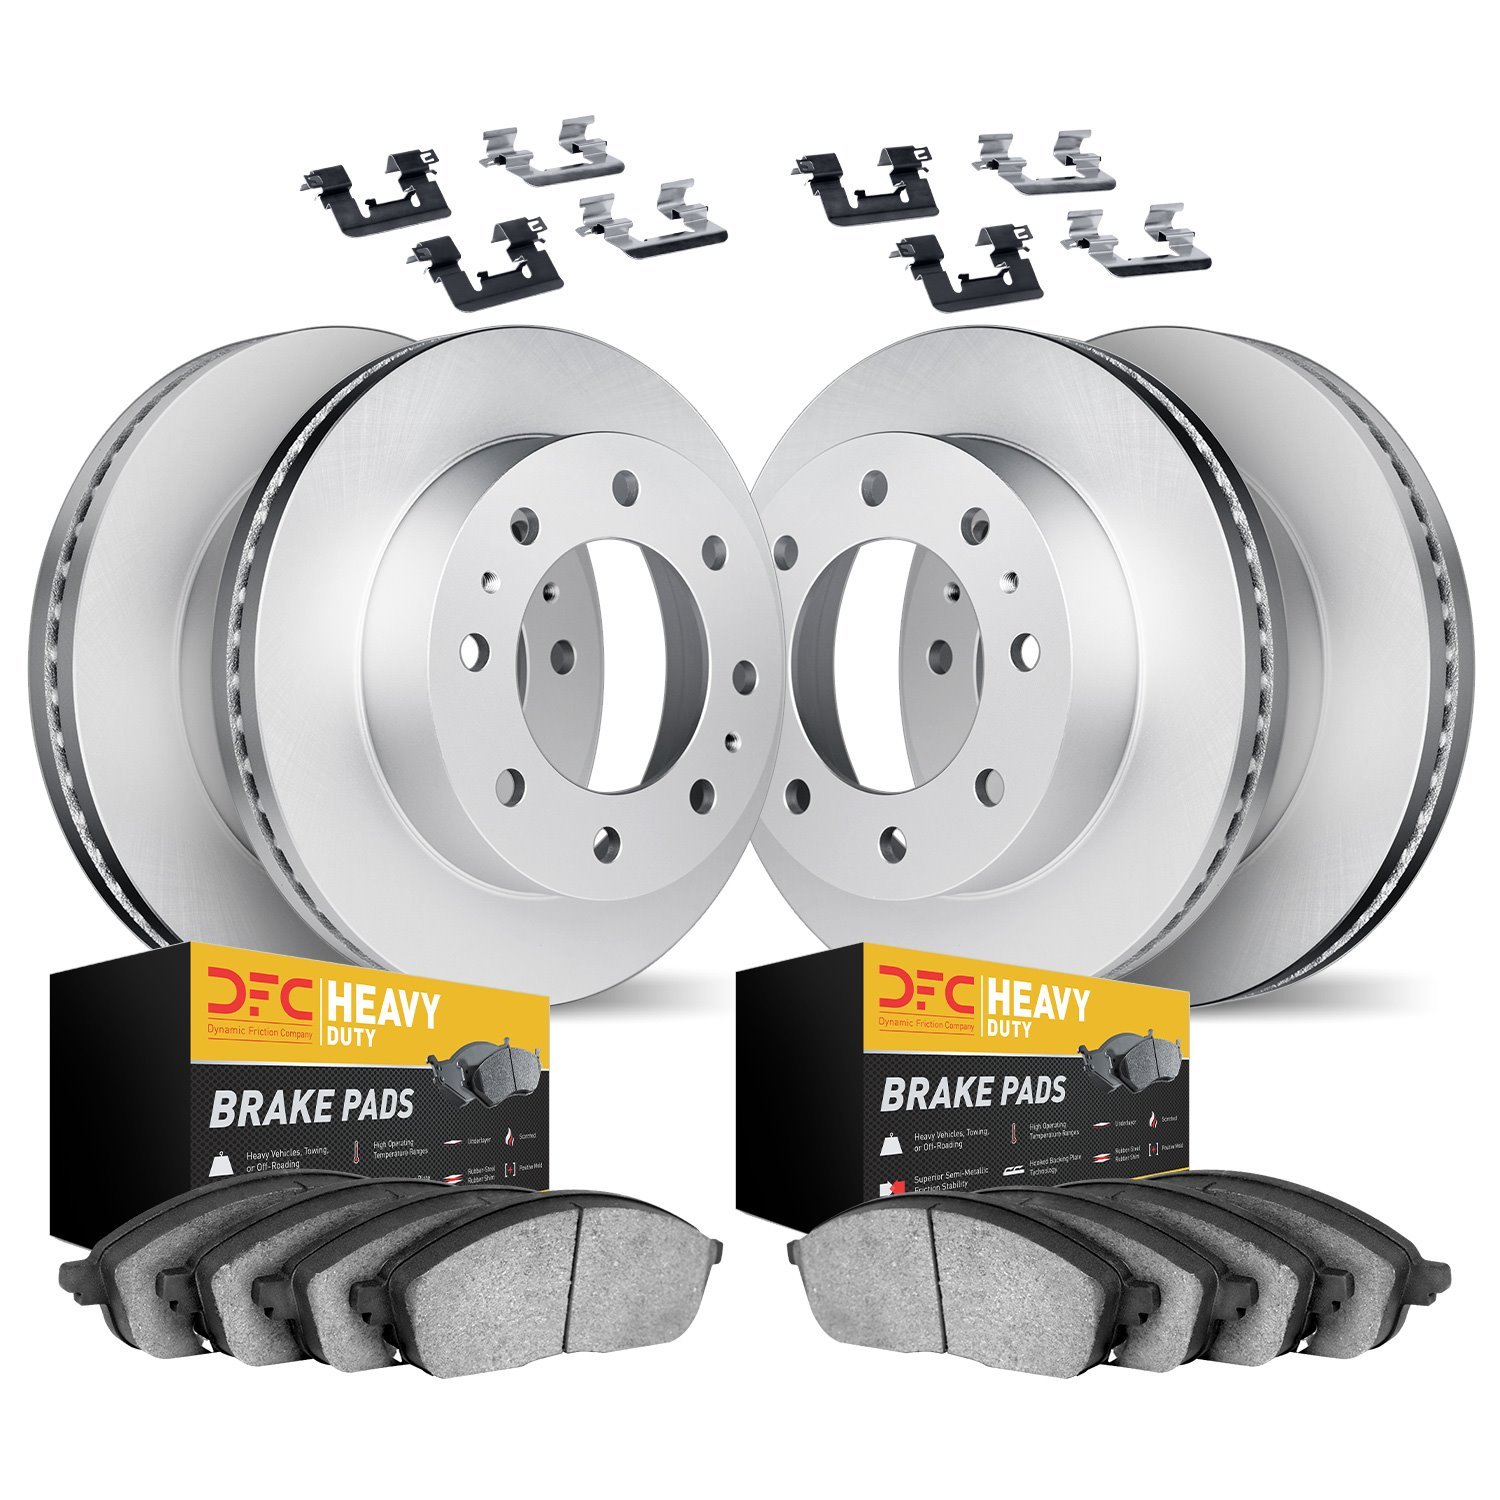 4214-48131 Geospec Brake Rotors w/Heavy-Duty Brake Pads & Hardware, 2001-2010 GM, Position: Front and Rear